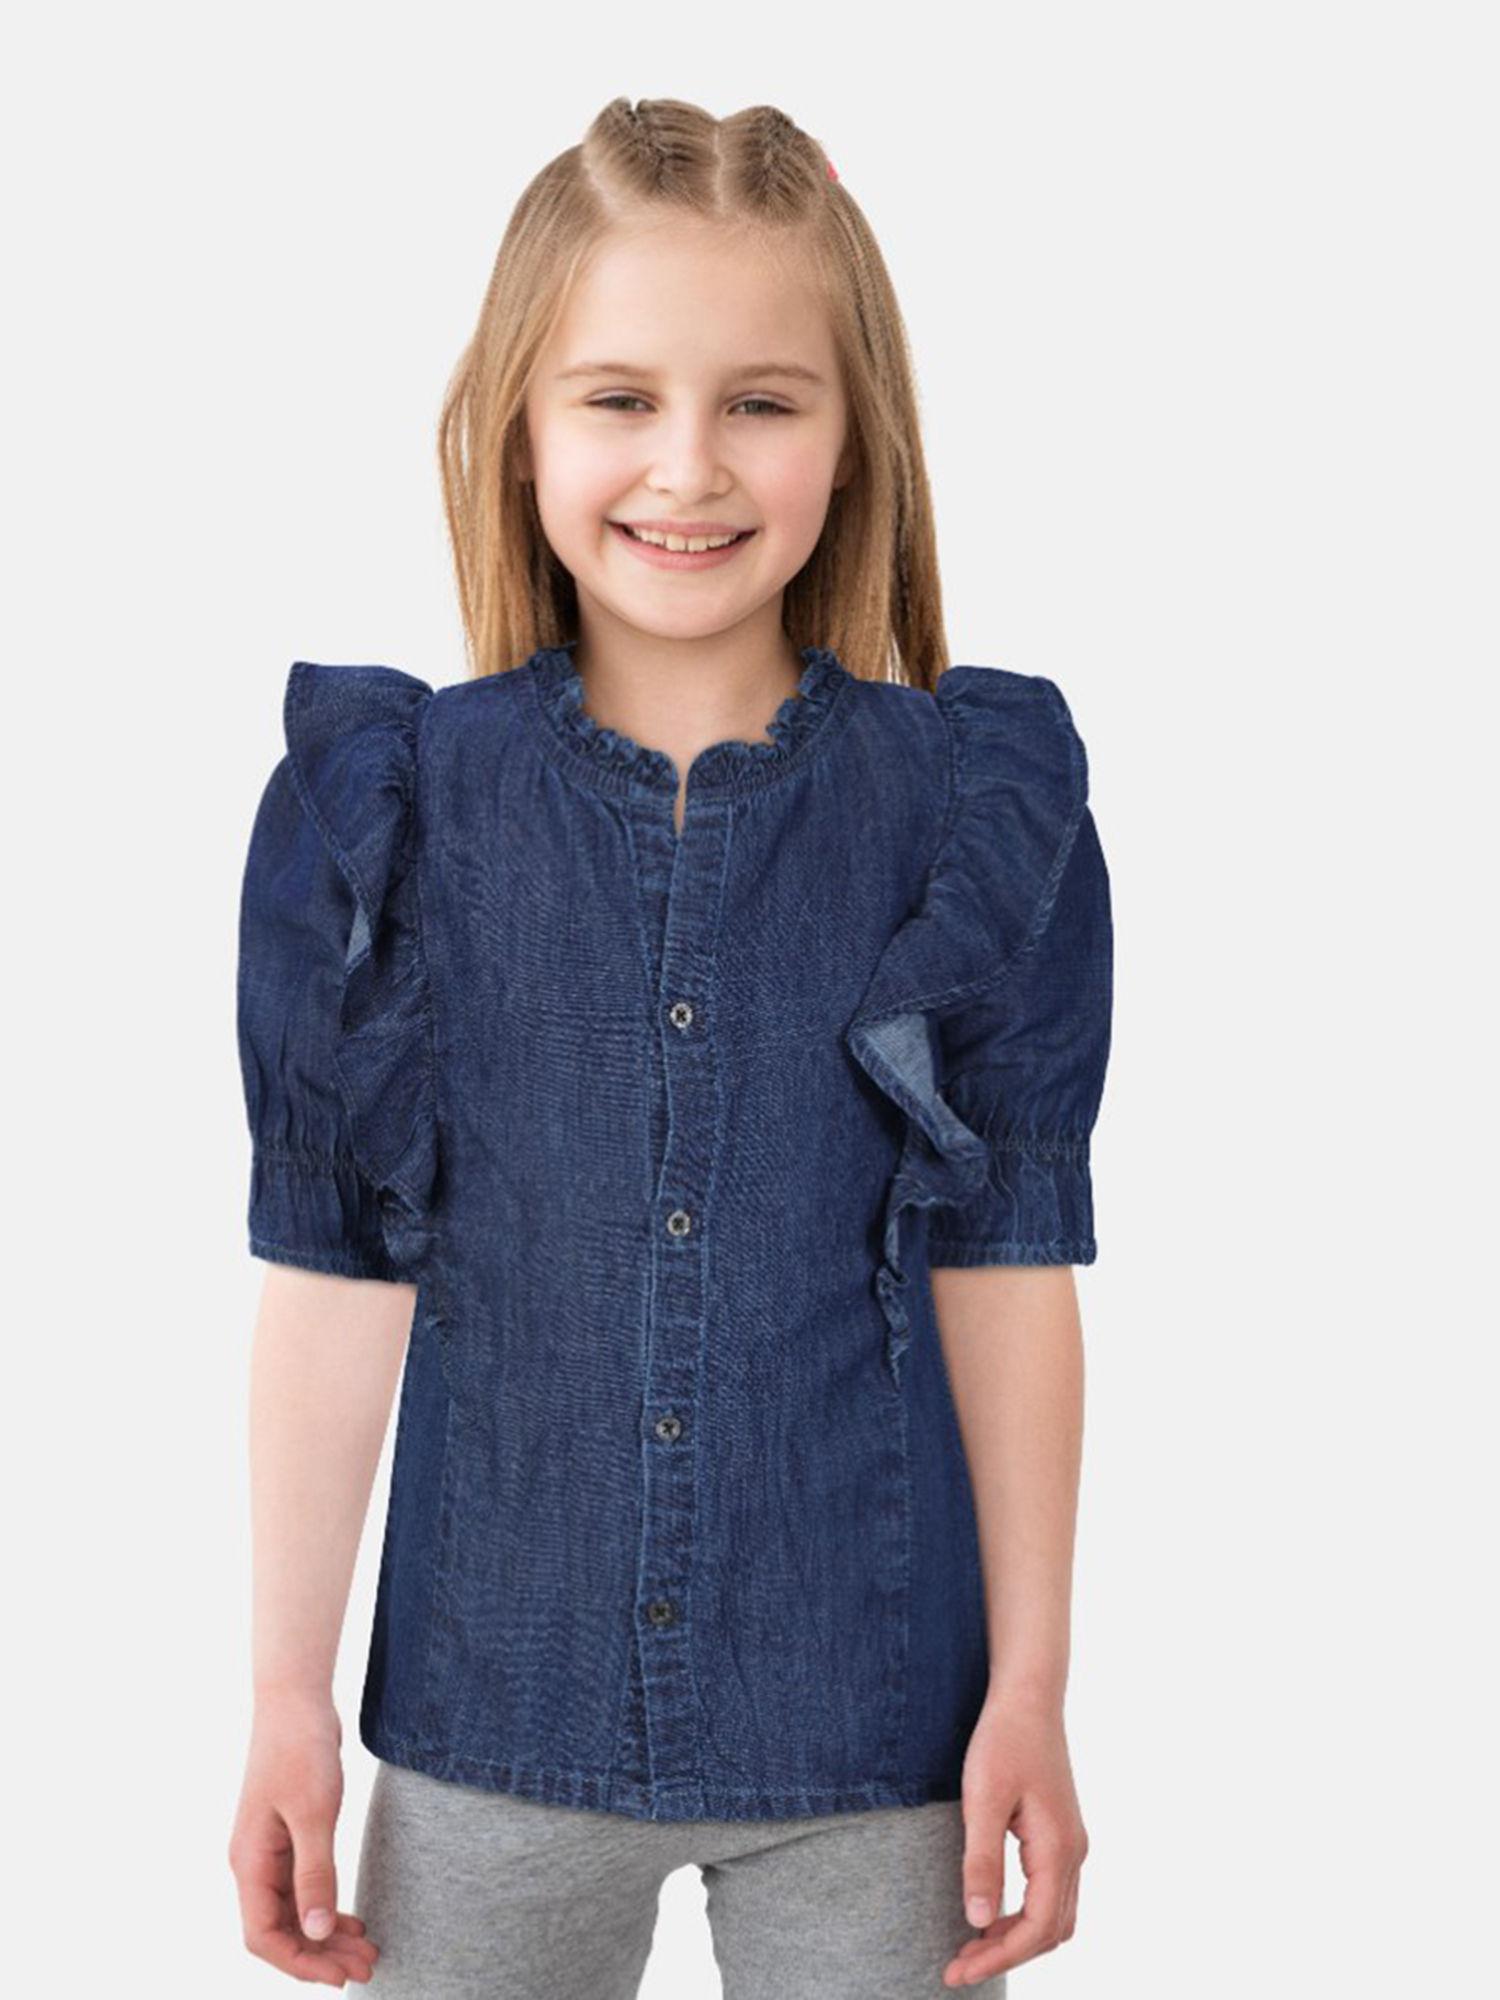 girls navy blue denim solid-plain knits top half sleeves